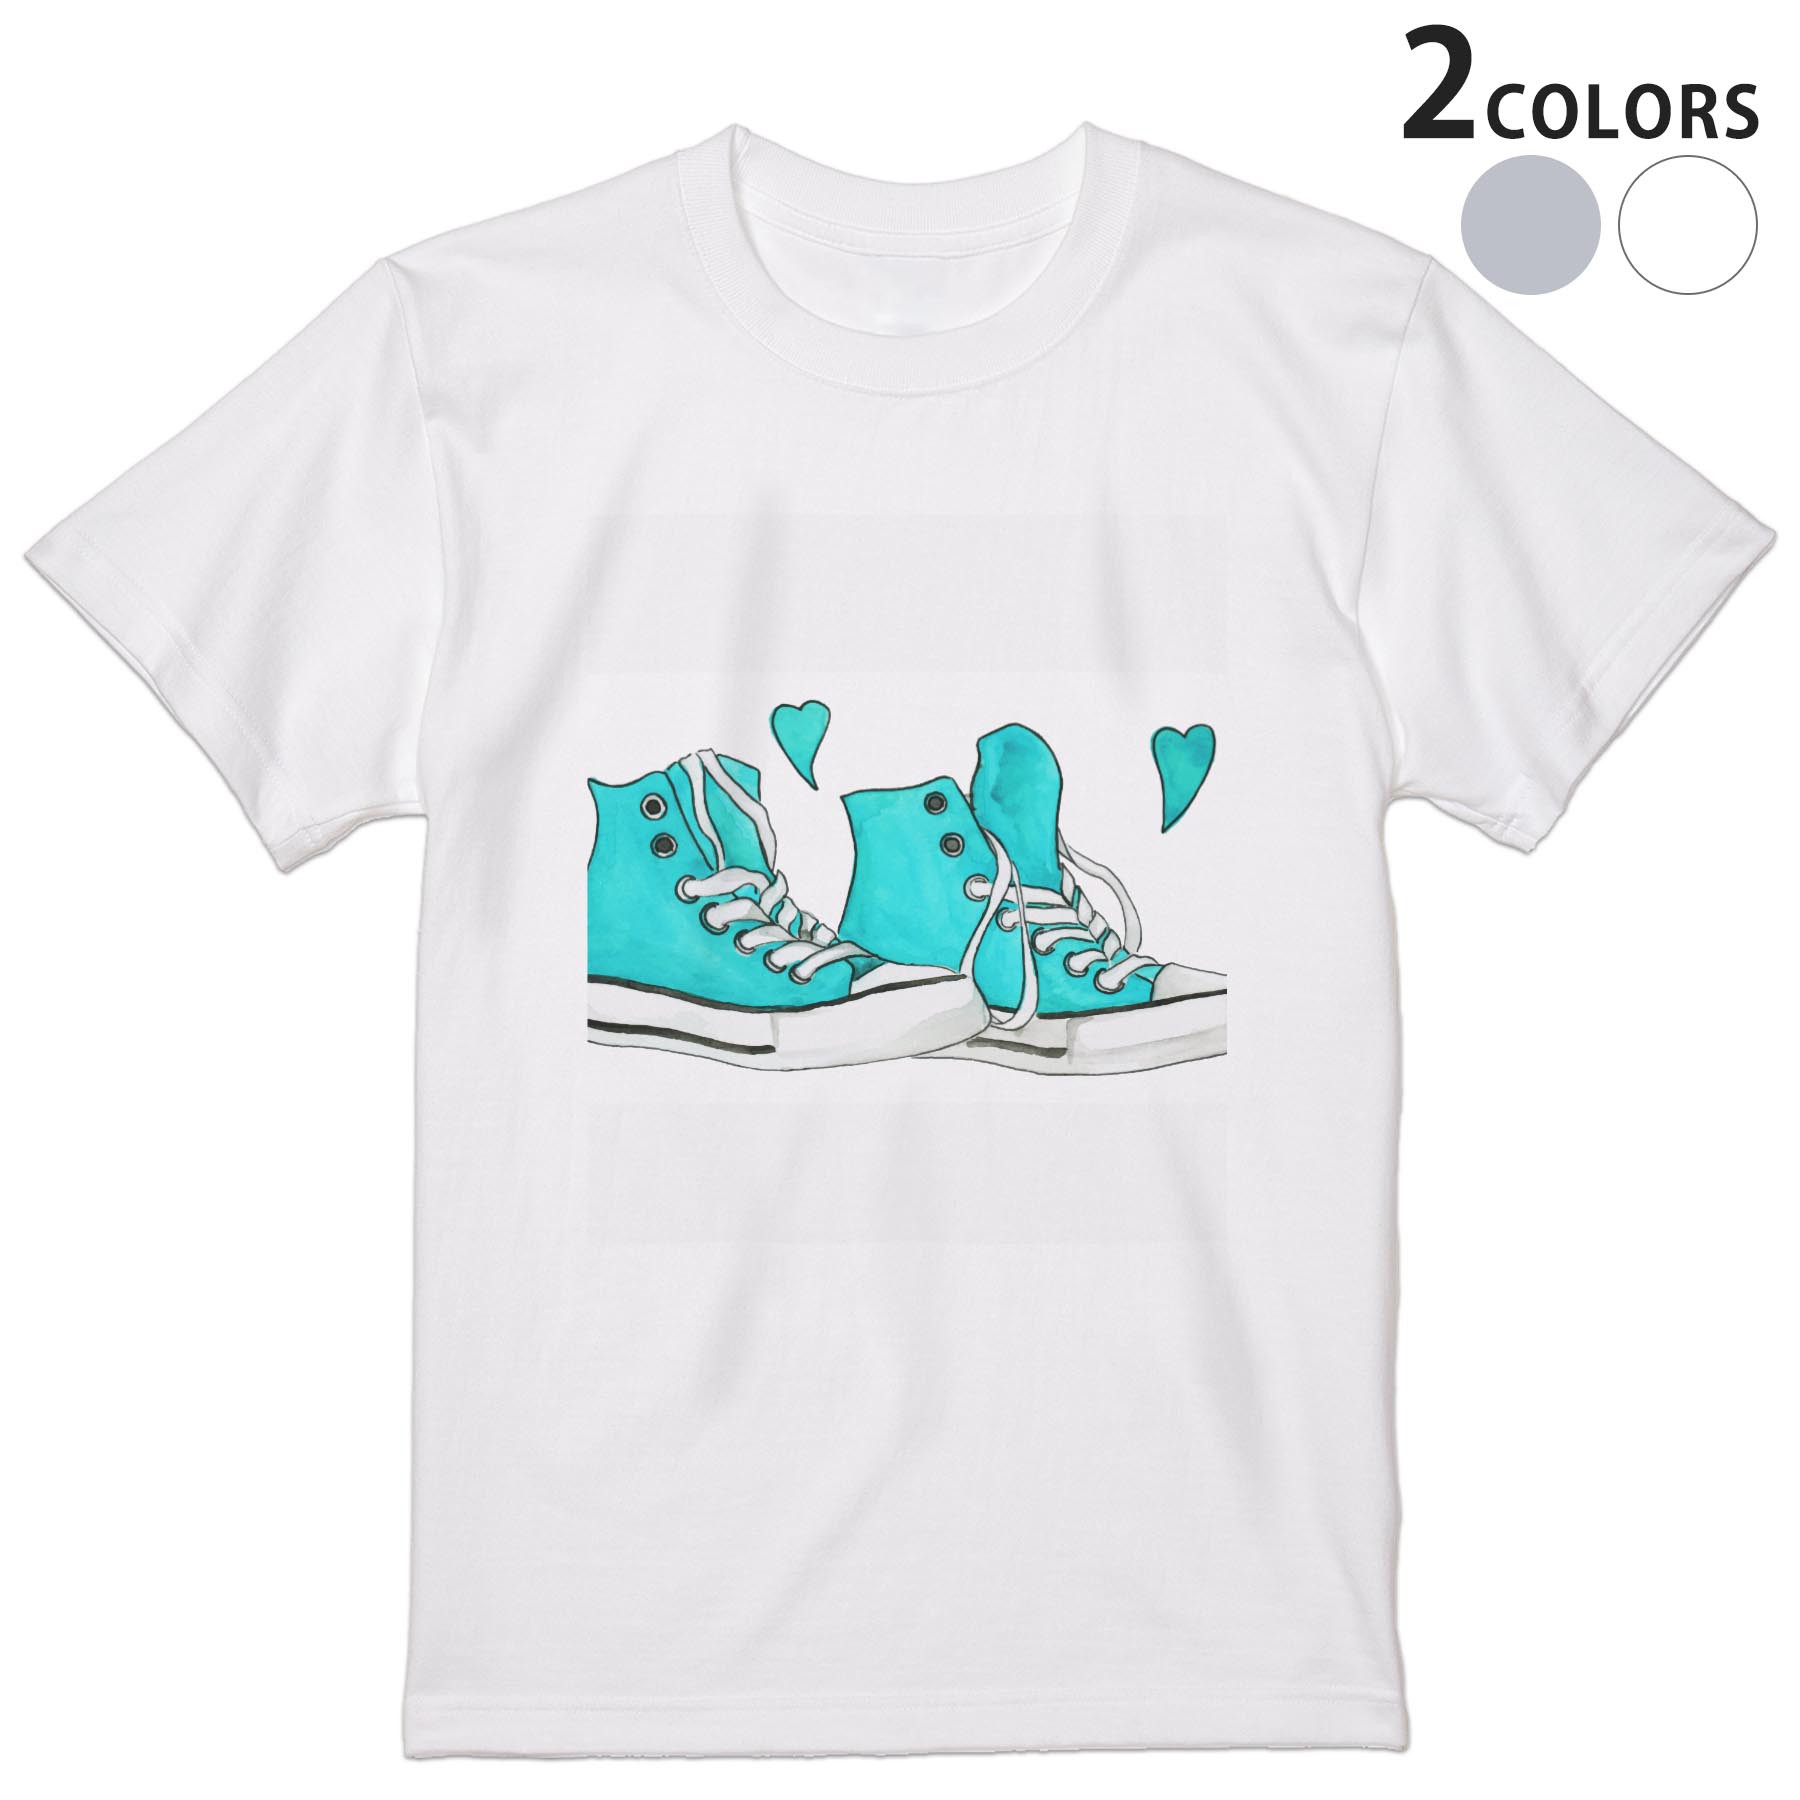 Tシャツ メンズ 半袖 ホワイト グレー デザイン S M L XL 2XL Tシャツ ティーシャツ T shirt 016313 靴..